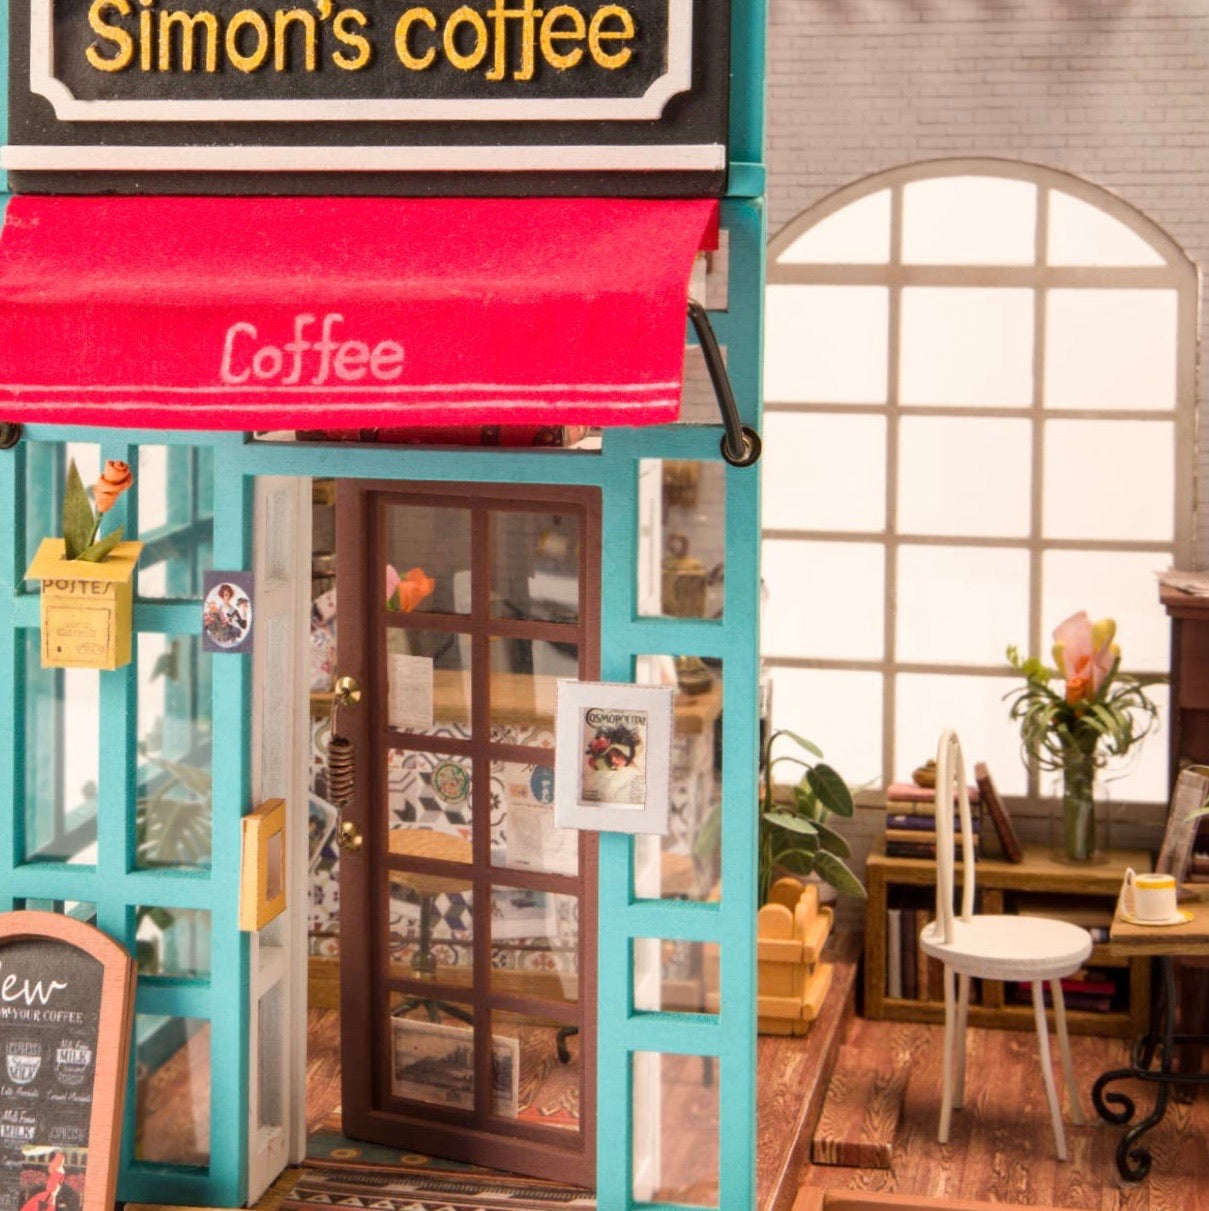 Simon’s Coffee Shop DIY Dollhouse Miniature Kit